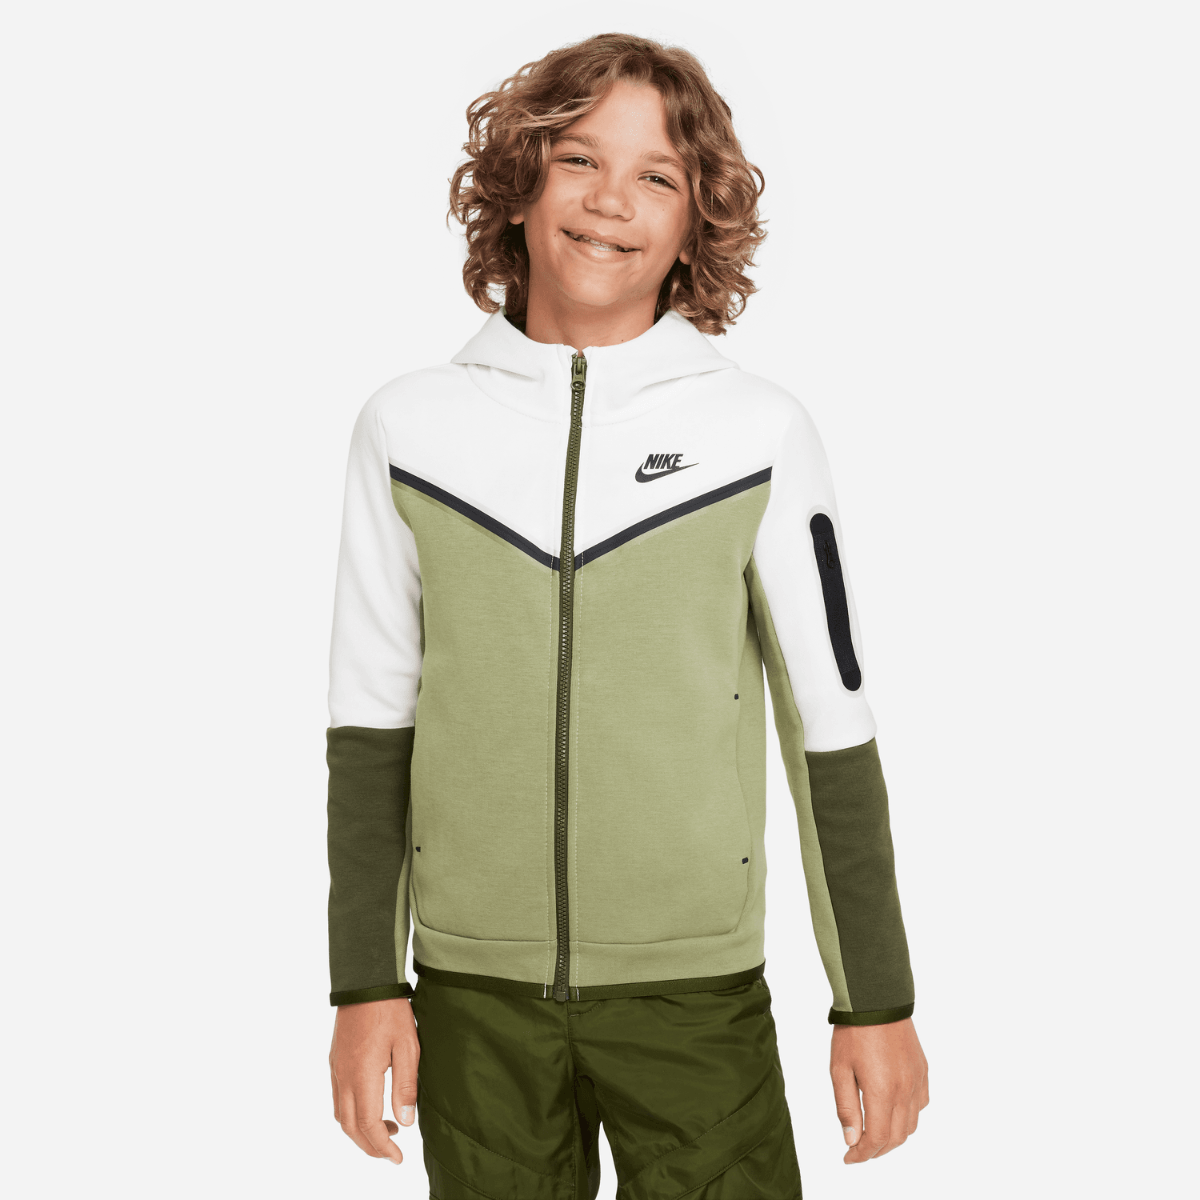 Veste Nike Tech Fleece Junior - Kaki/Blanc/Noir